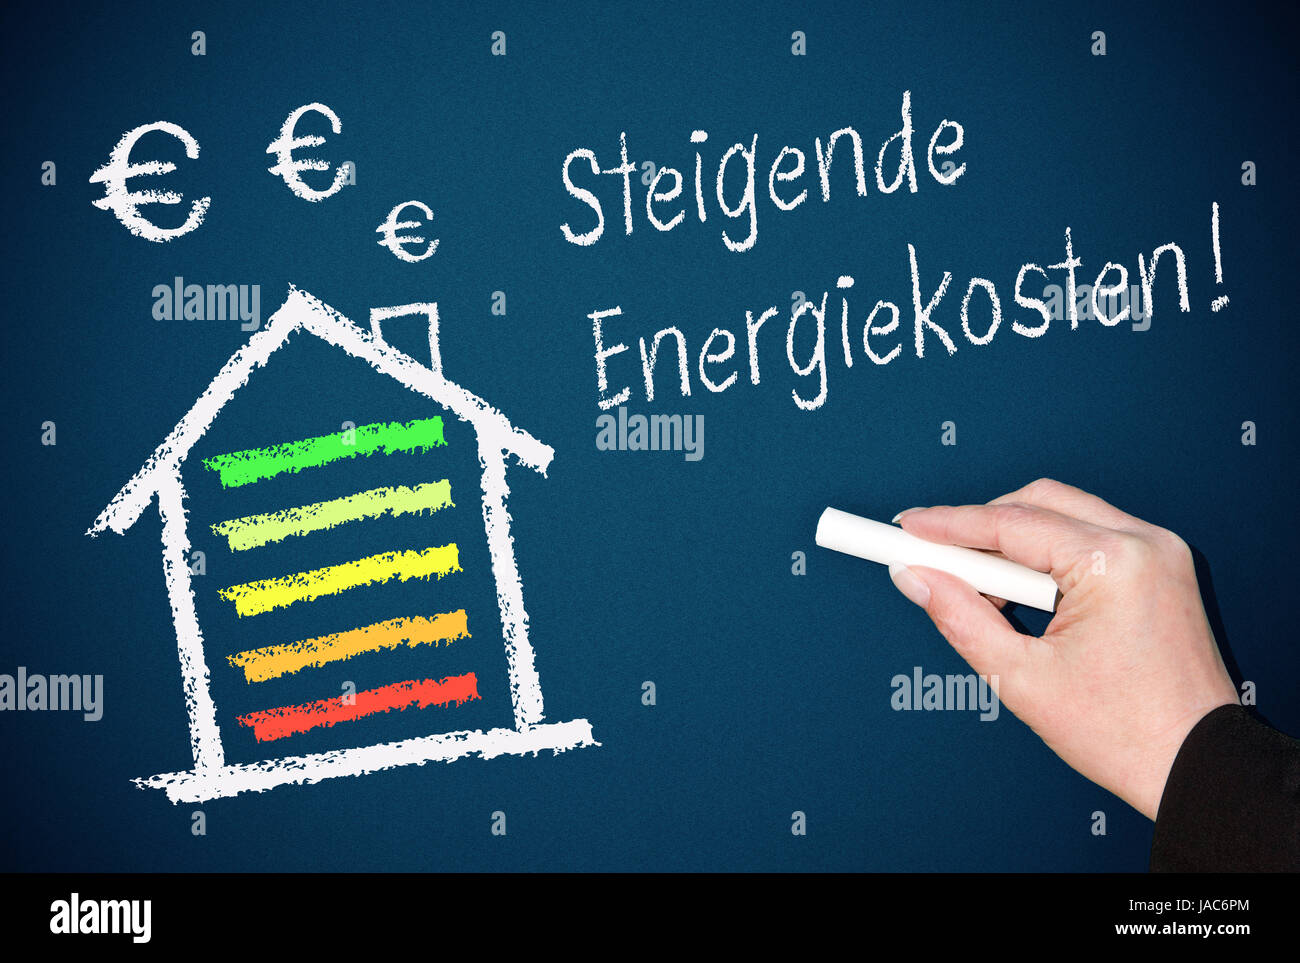 Steigende Energiekosten Stock Photo